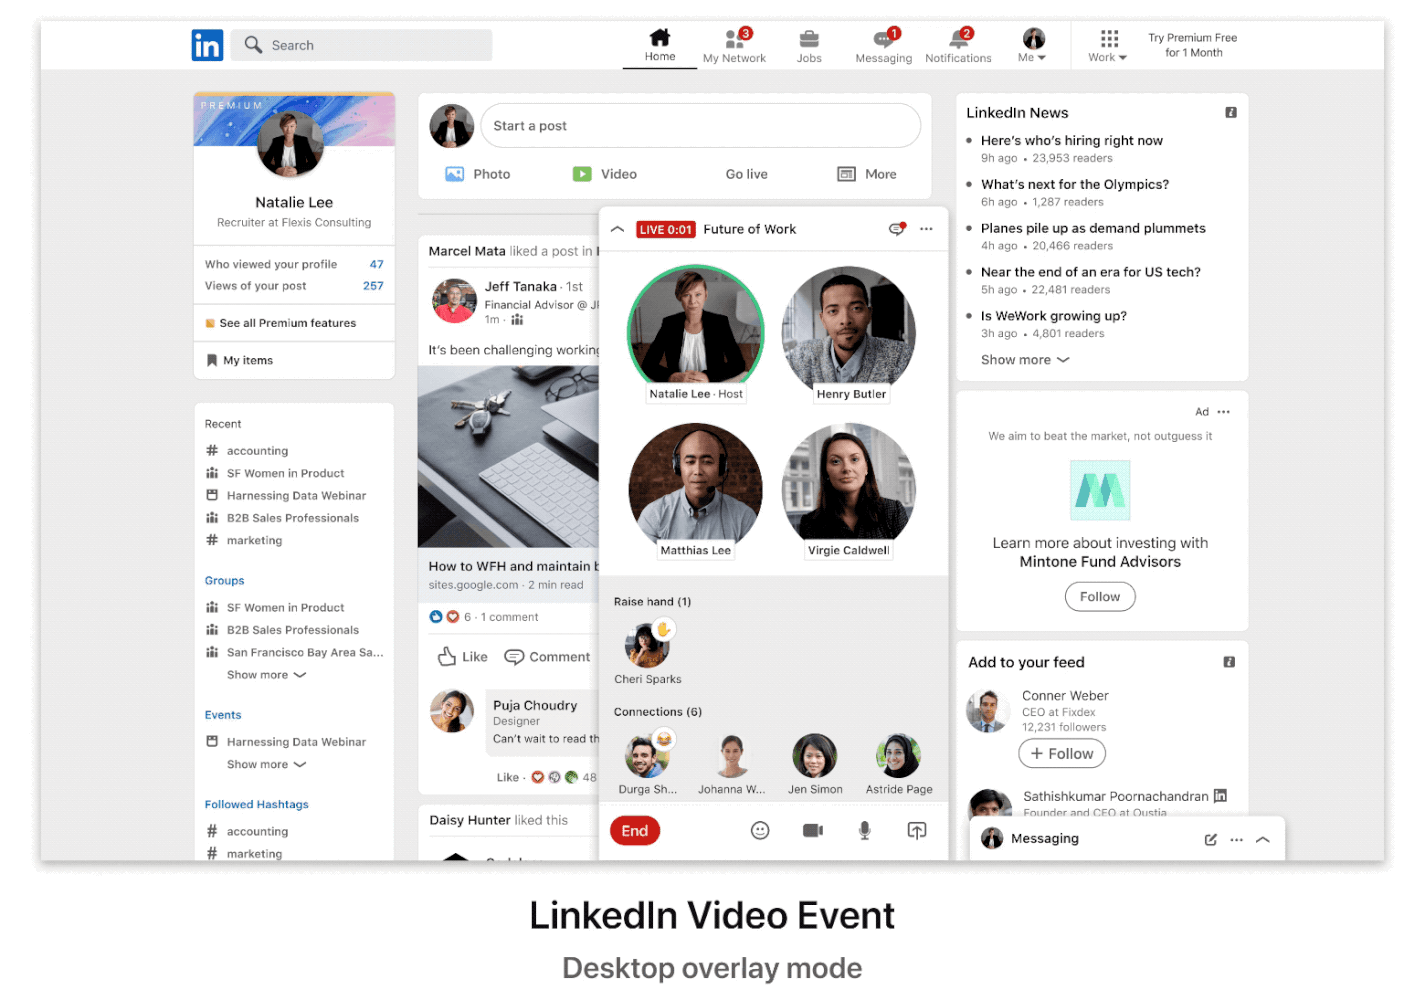 LinkedIn Video Event